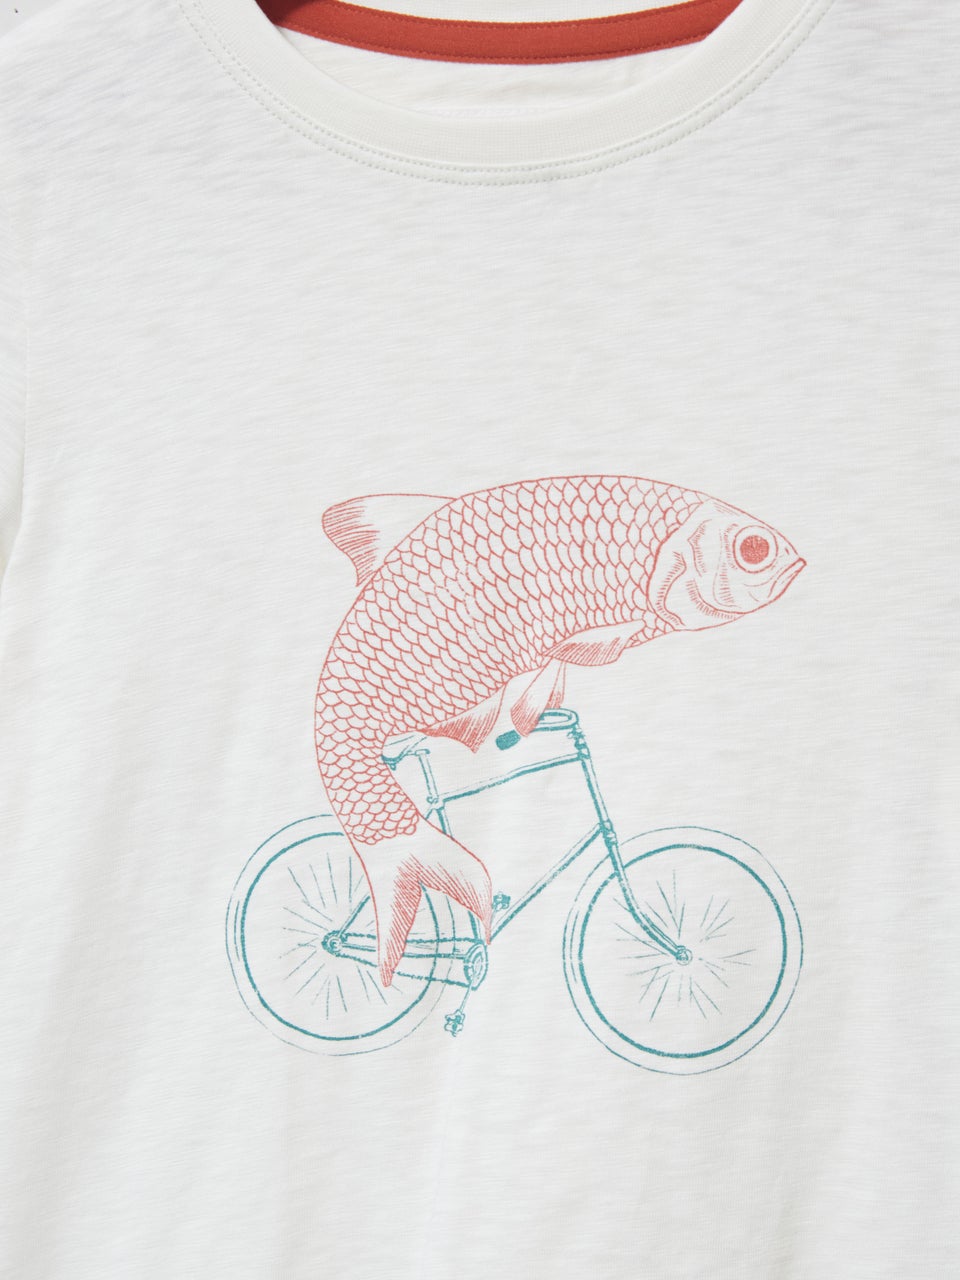 Fish on a Bike Graphic Tee